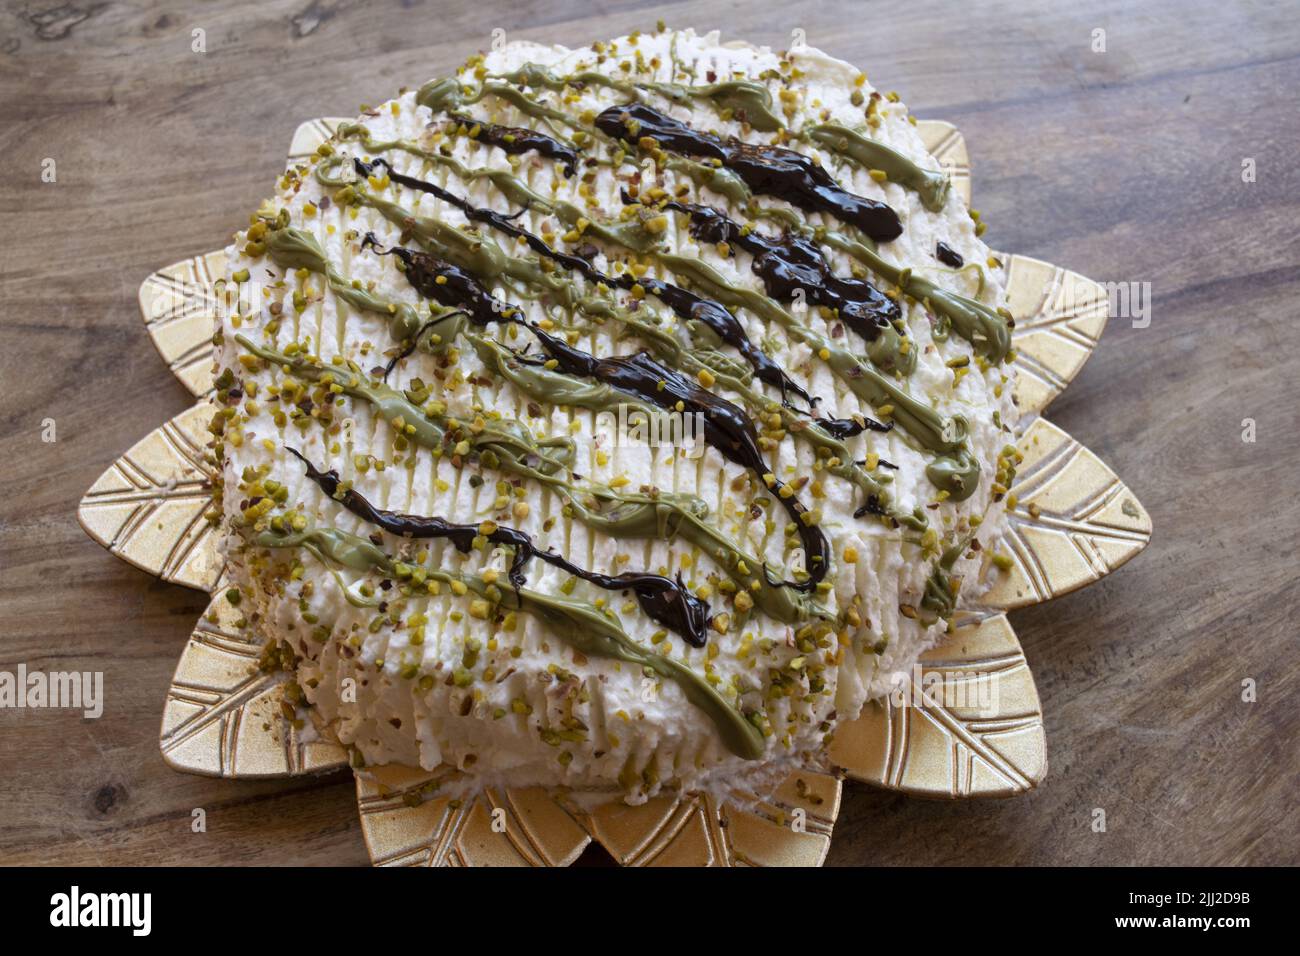 homemade pistachio and chocolate cream cake Stock Photo